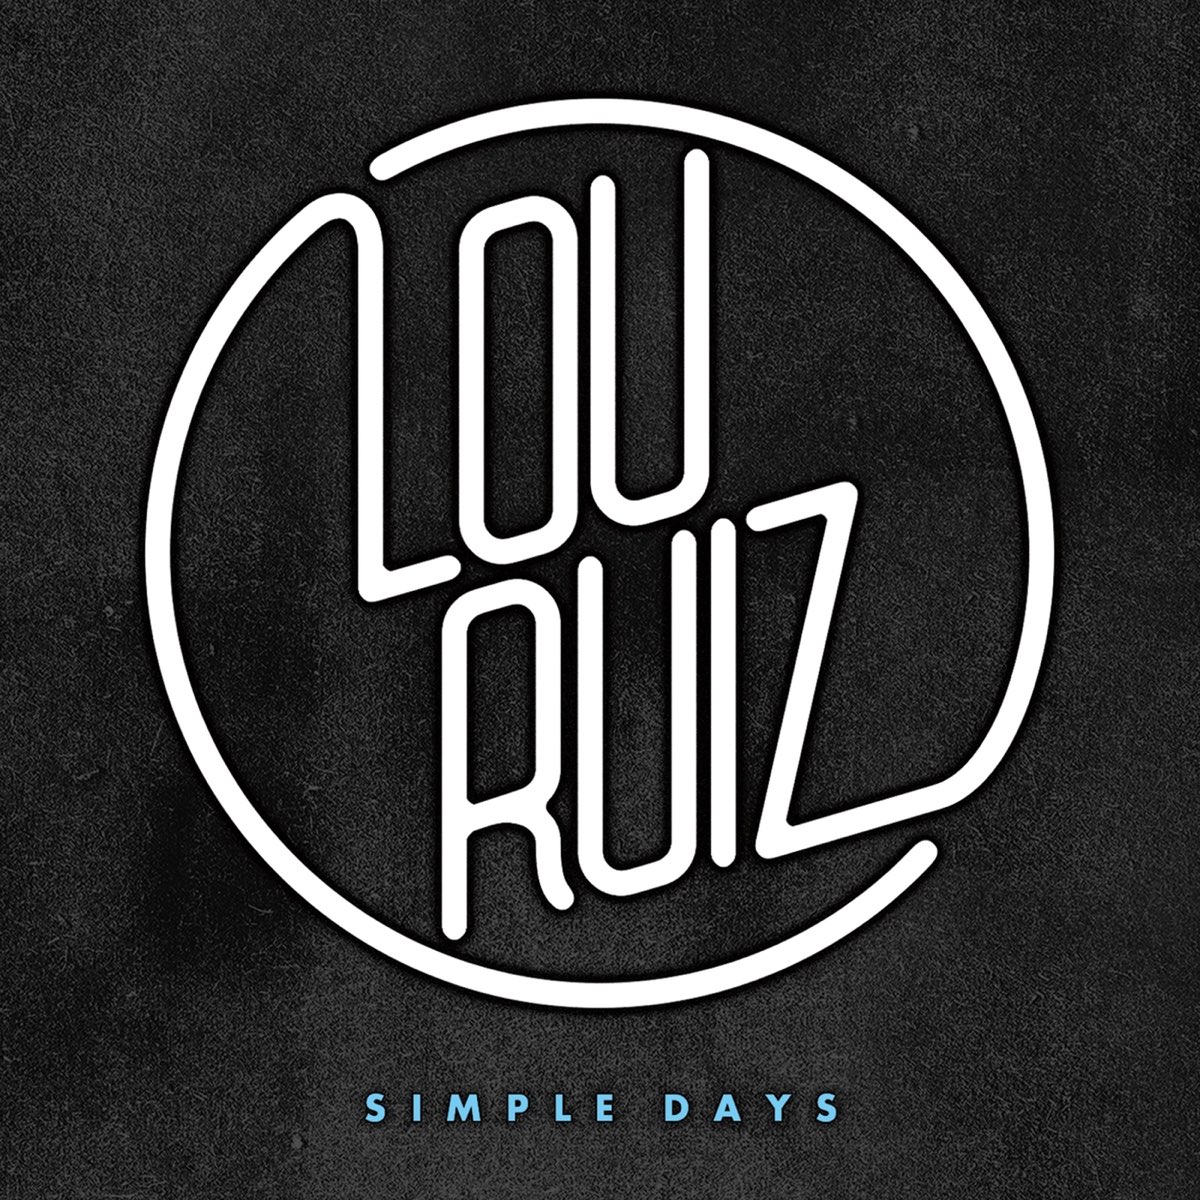 Simply days. Lou песни. Simple Days.